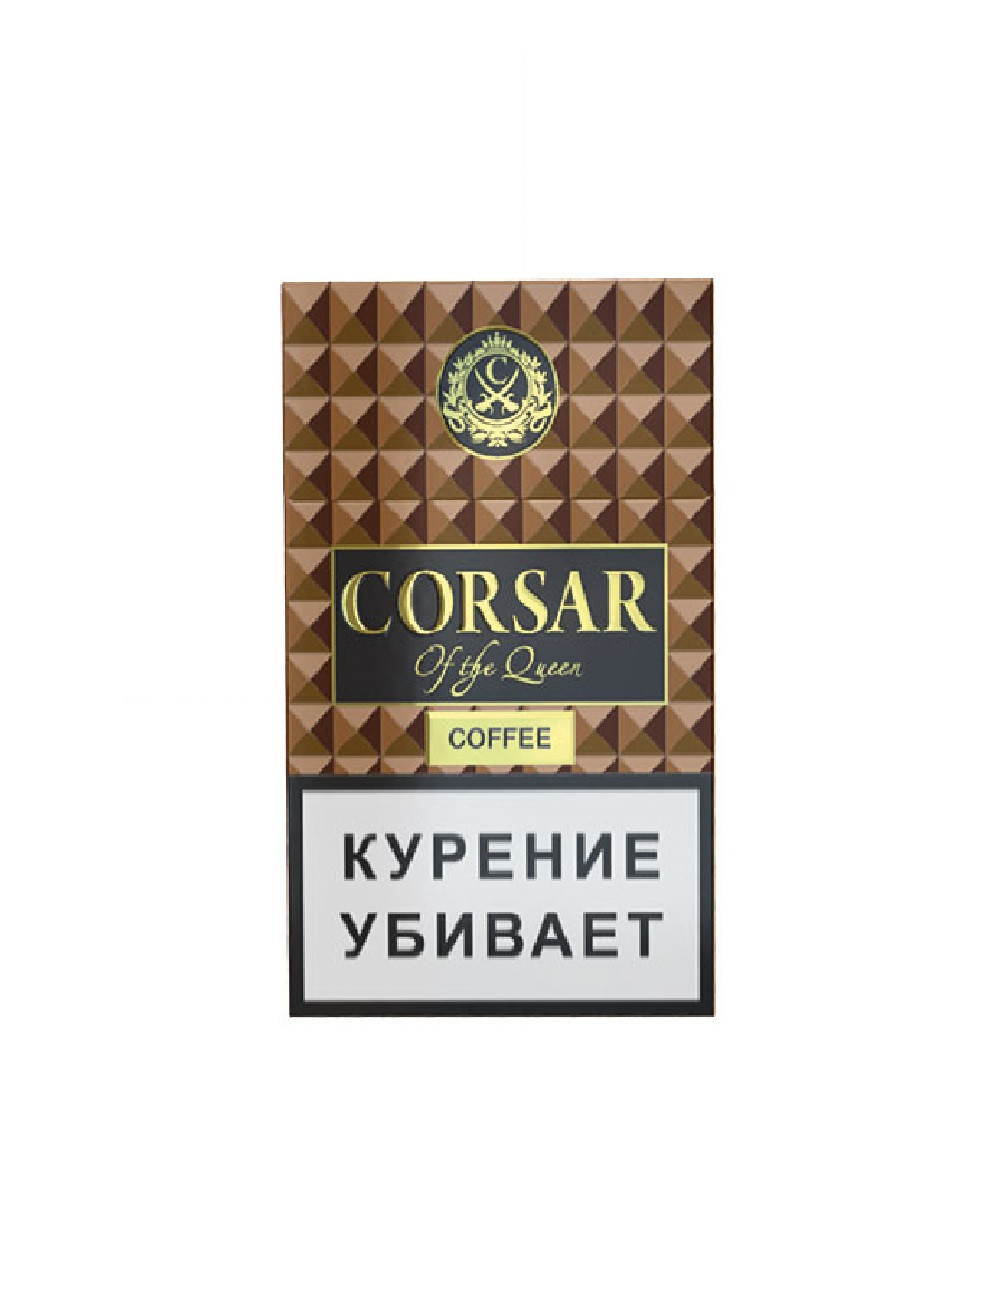 Corsar of the Queen BLACK (Coffee)